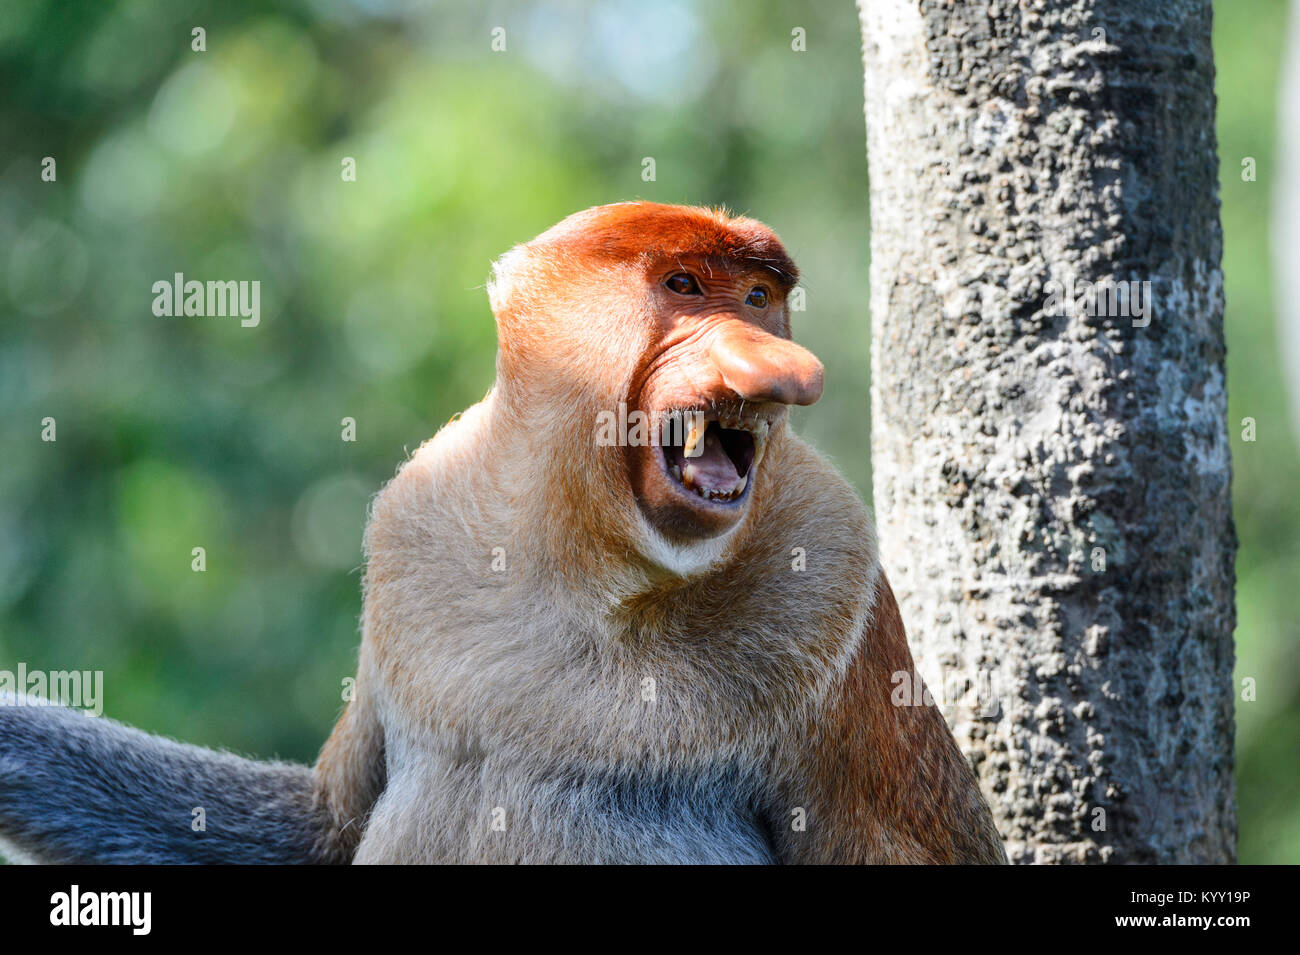 retrato-de-una-proboscide-mono-nasalis-larvatus-mostrando-los-dientes-proboscis-monkey-sanctuary-labuk-bay-cerca-de-sandakan-borneo-sabah-malasia-kyy19p.jpg